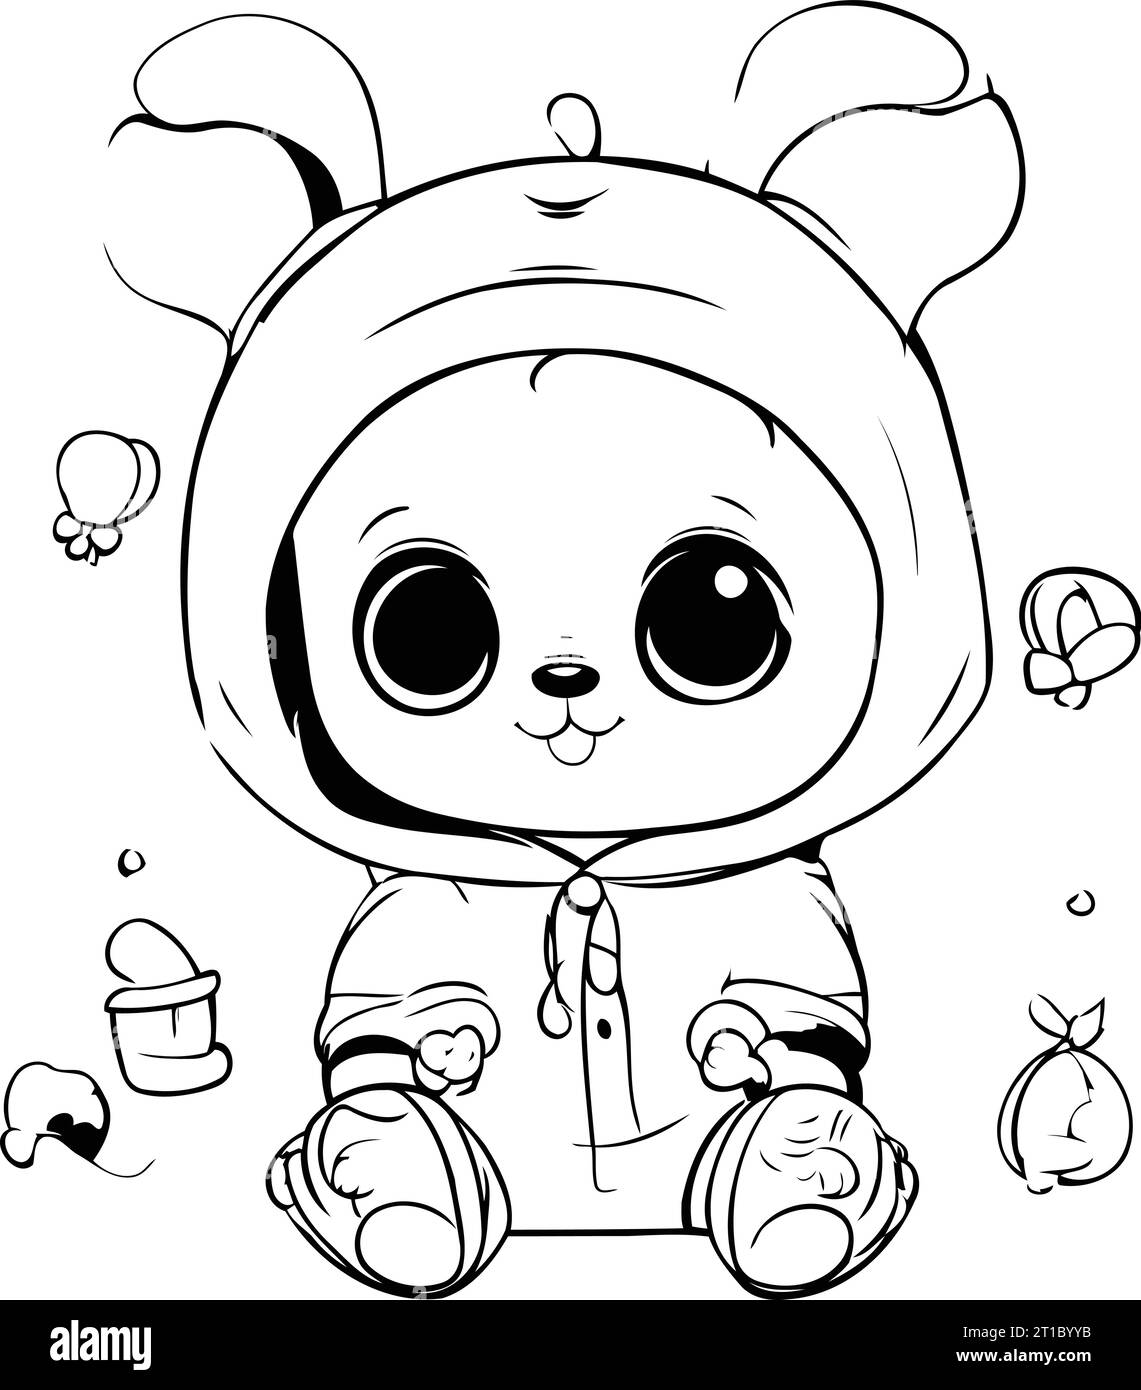 Cute cartoon baby panda vector illustration for coloring book stock vector image art